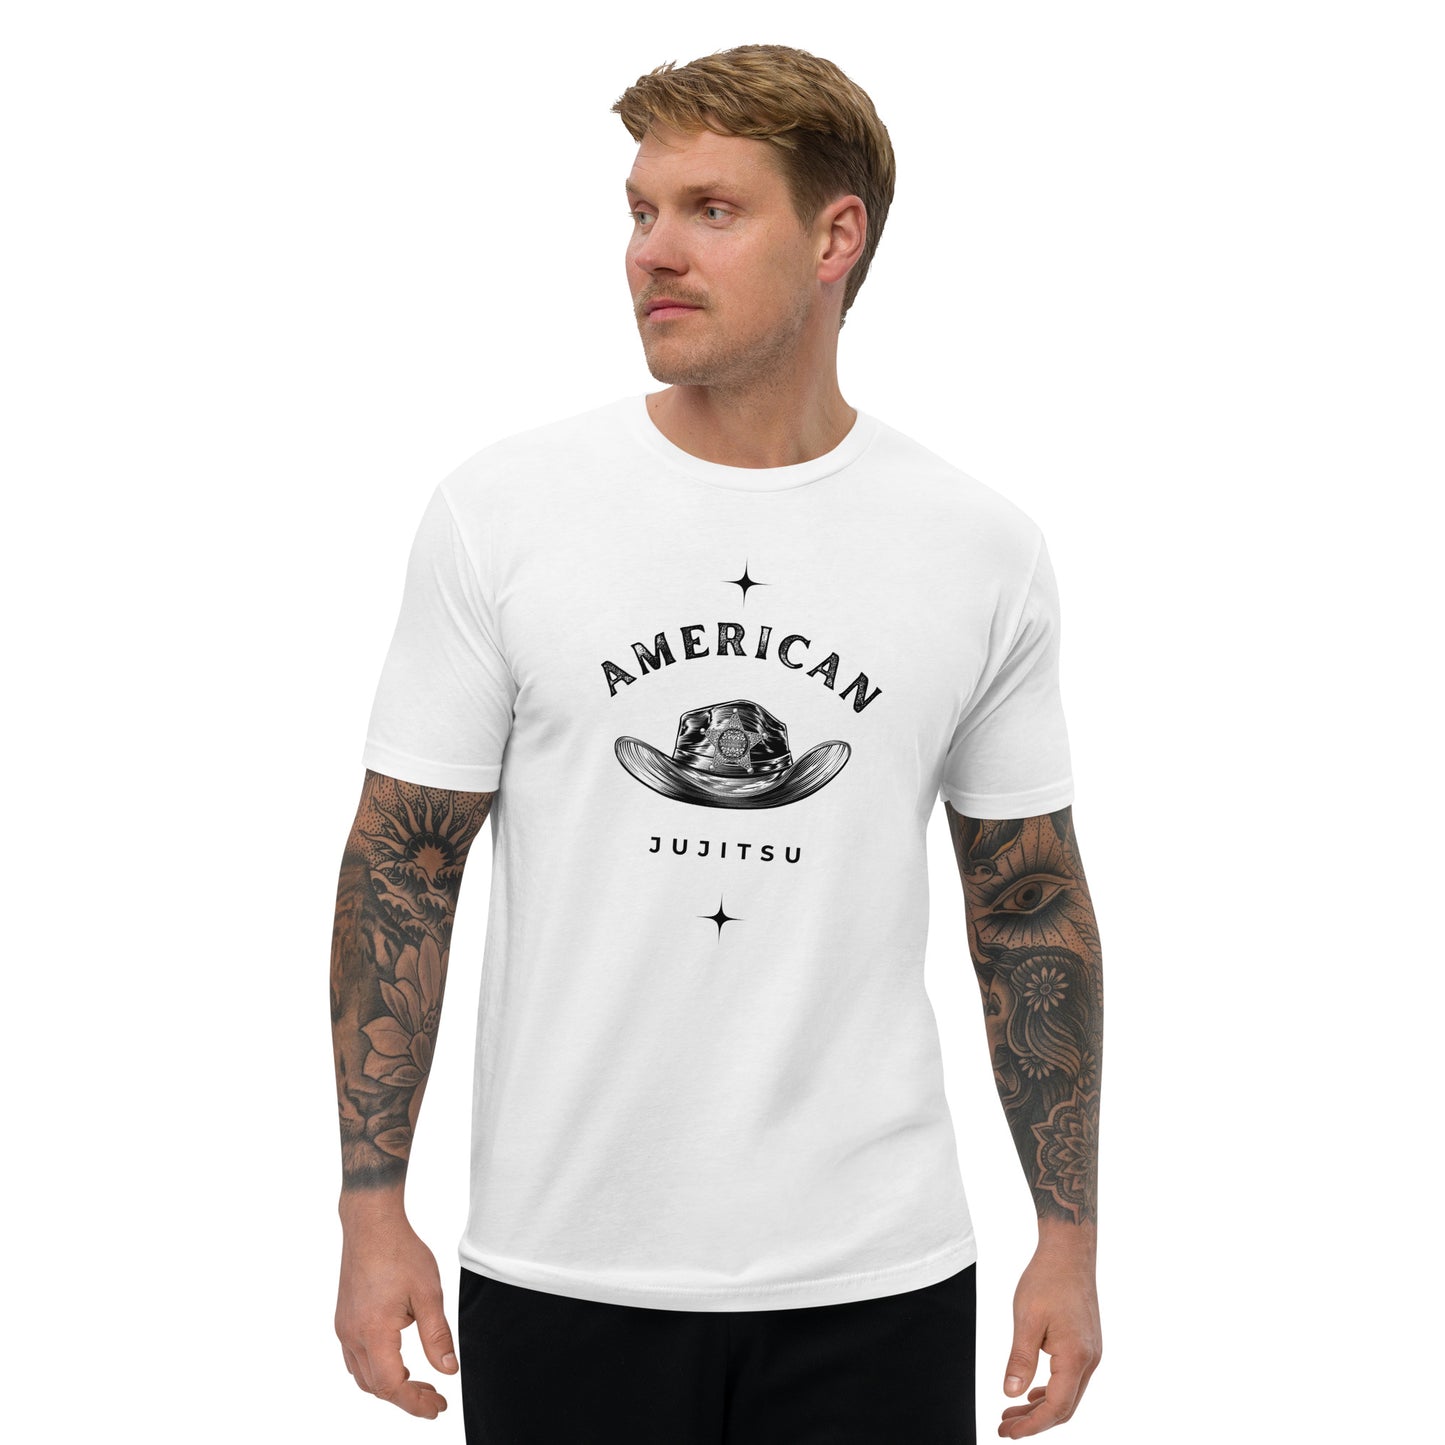 American Jujitsu Short Sleeve fitted T-shirt!